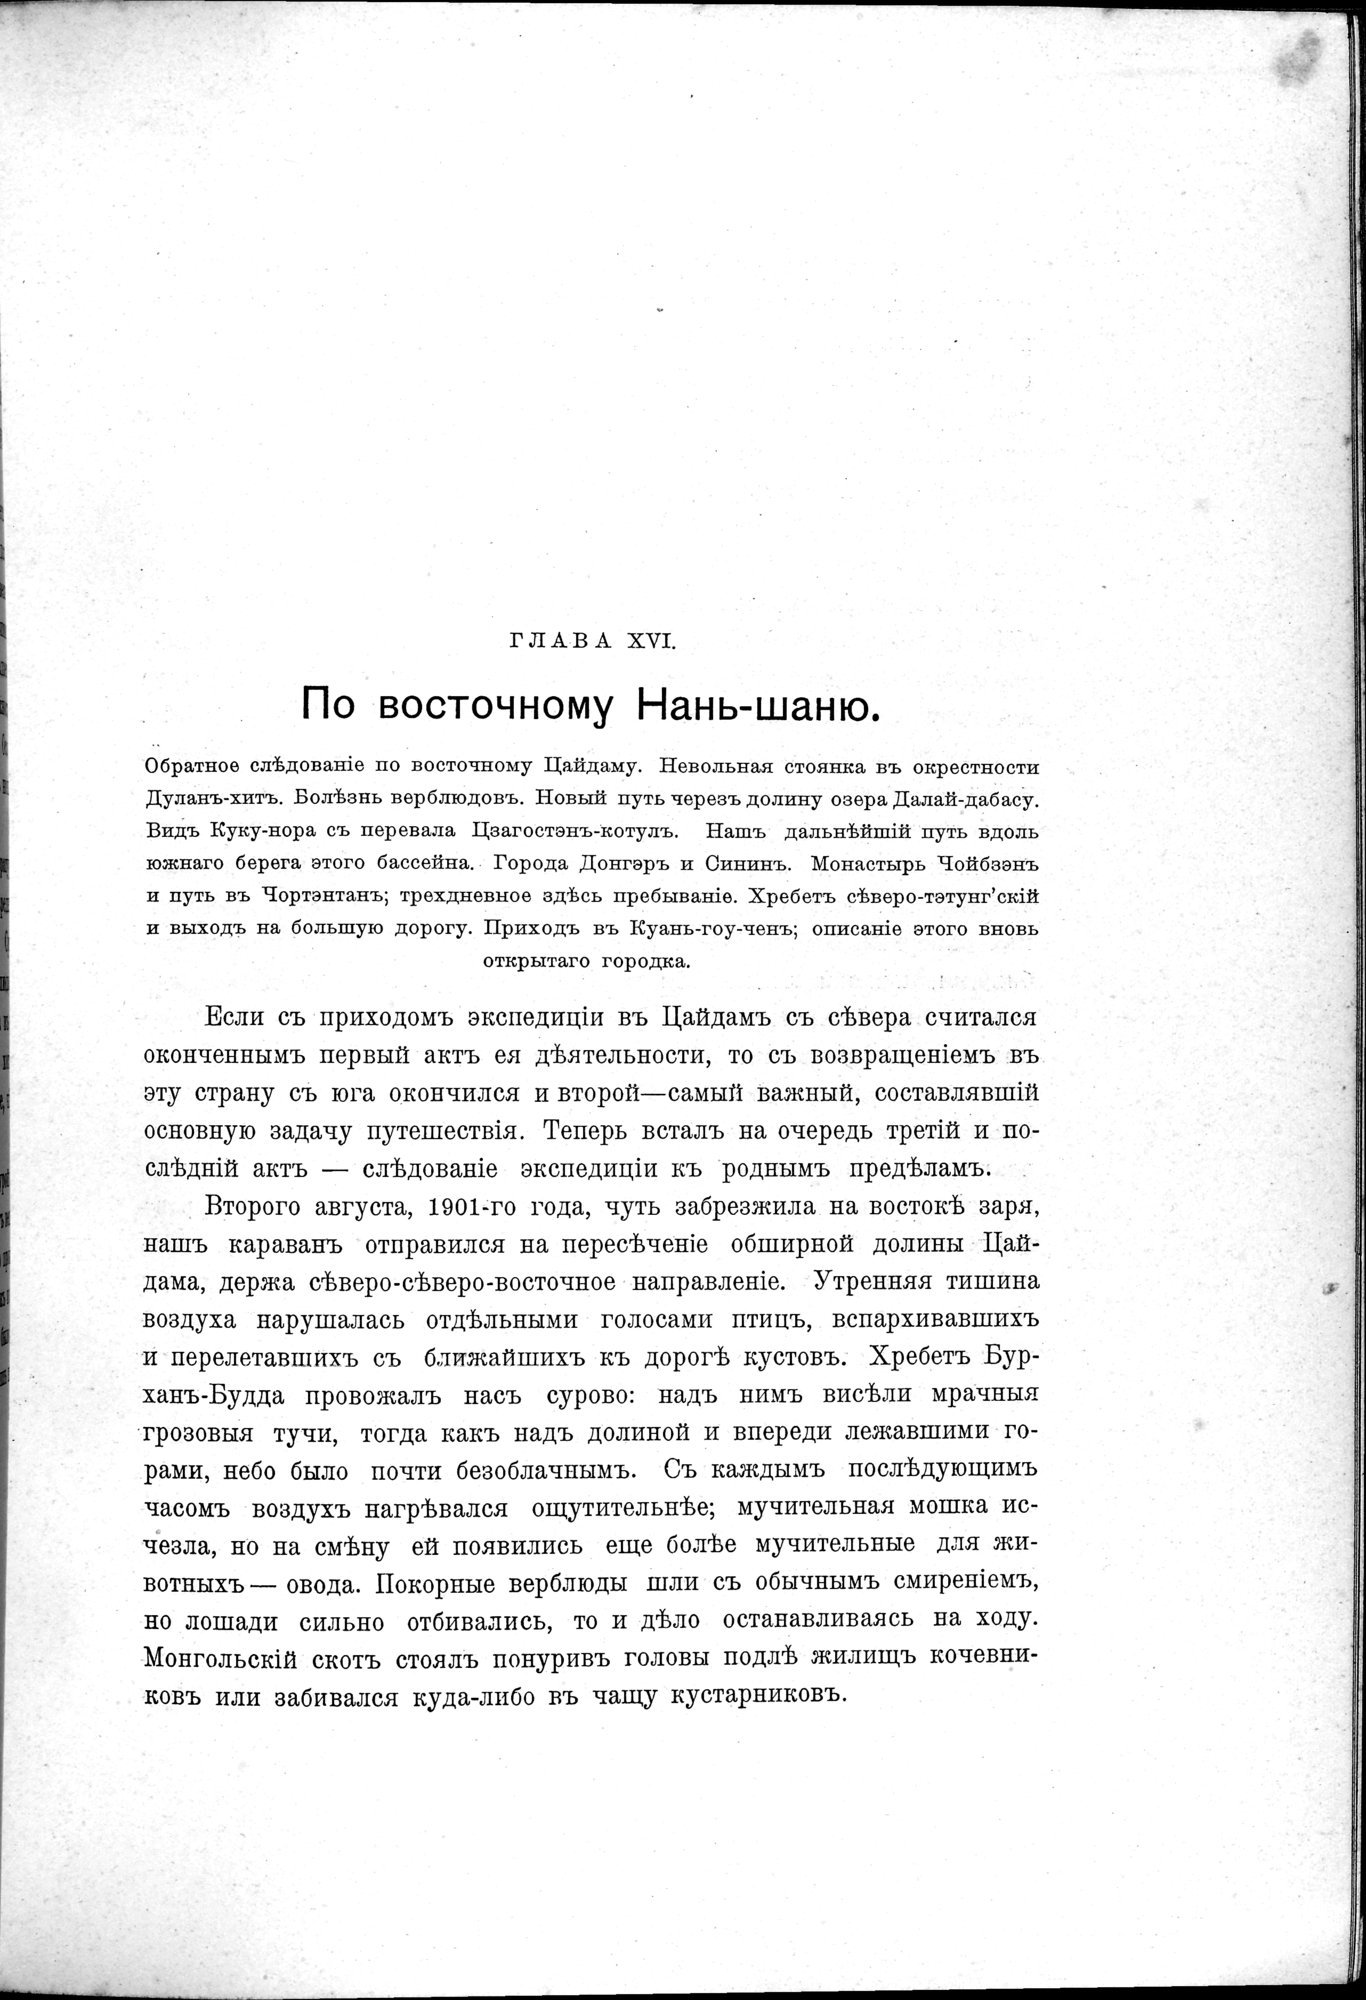 Mongoliia i Kam : vol.2 / Page 451 (Grayscale High Resolution Image)